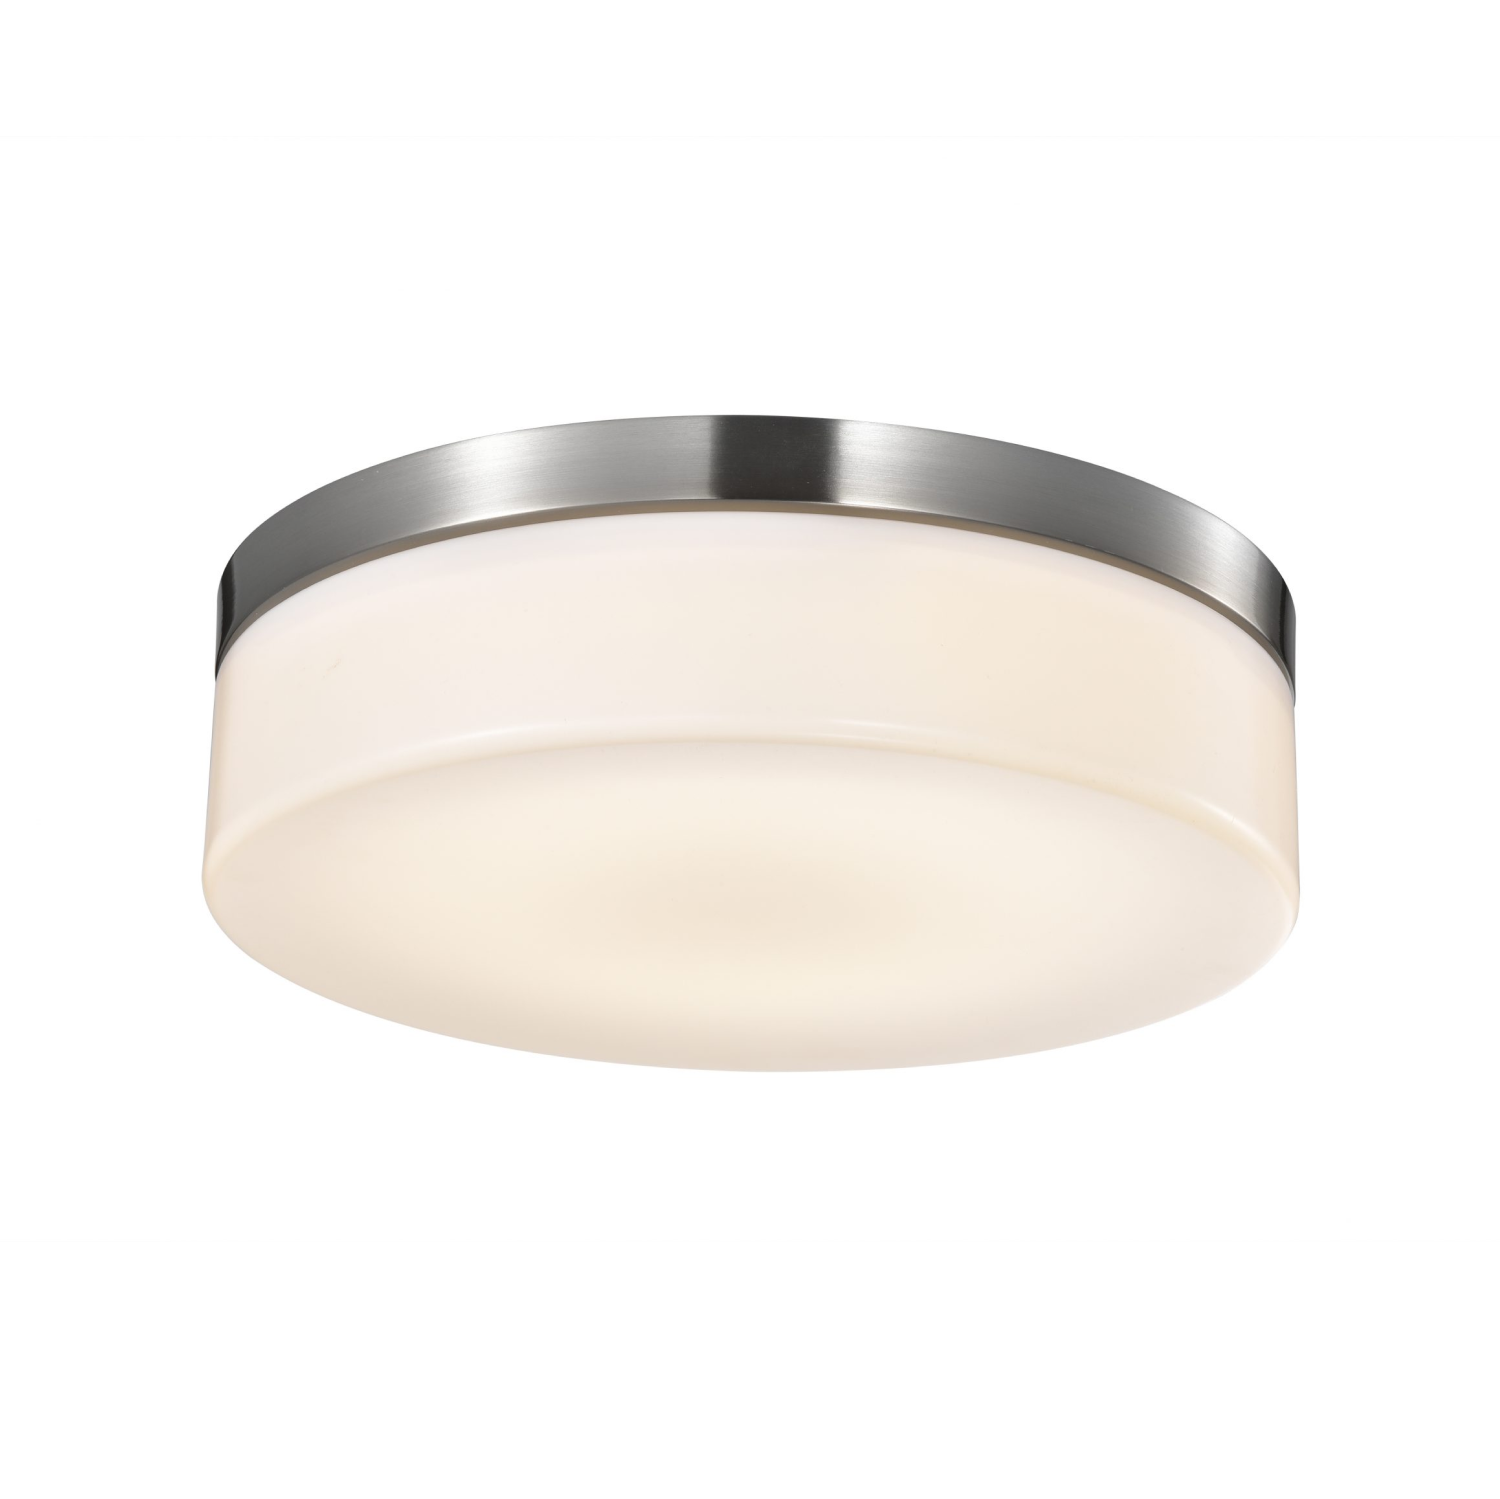 11 Inch Round LED Ceiling Light, Craft, White, Surface Mount, 120V, 1600 Lumens